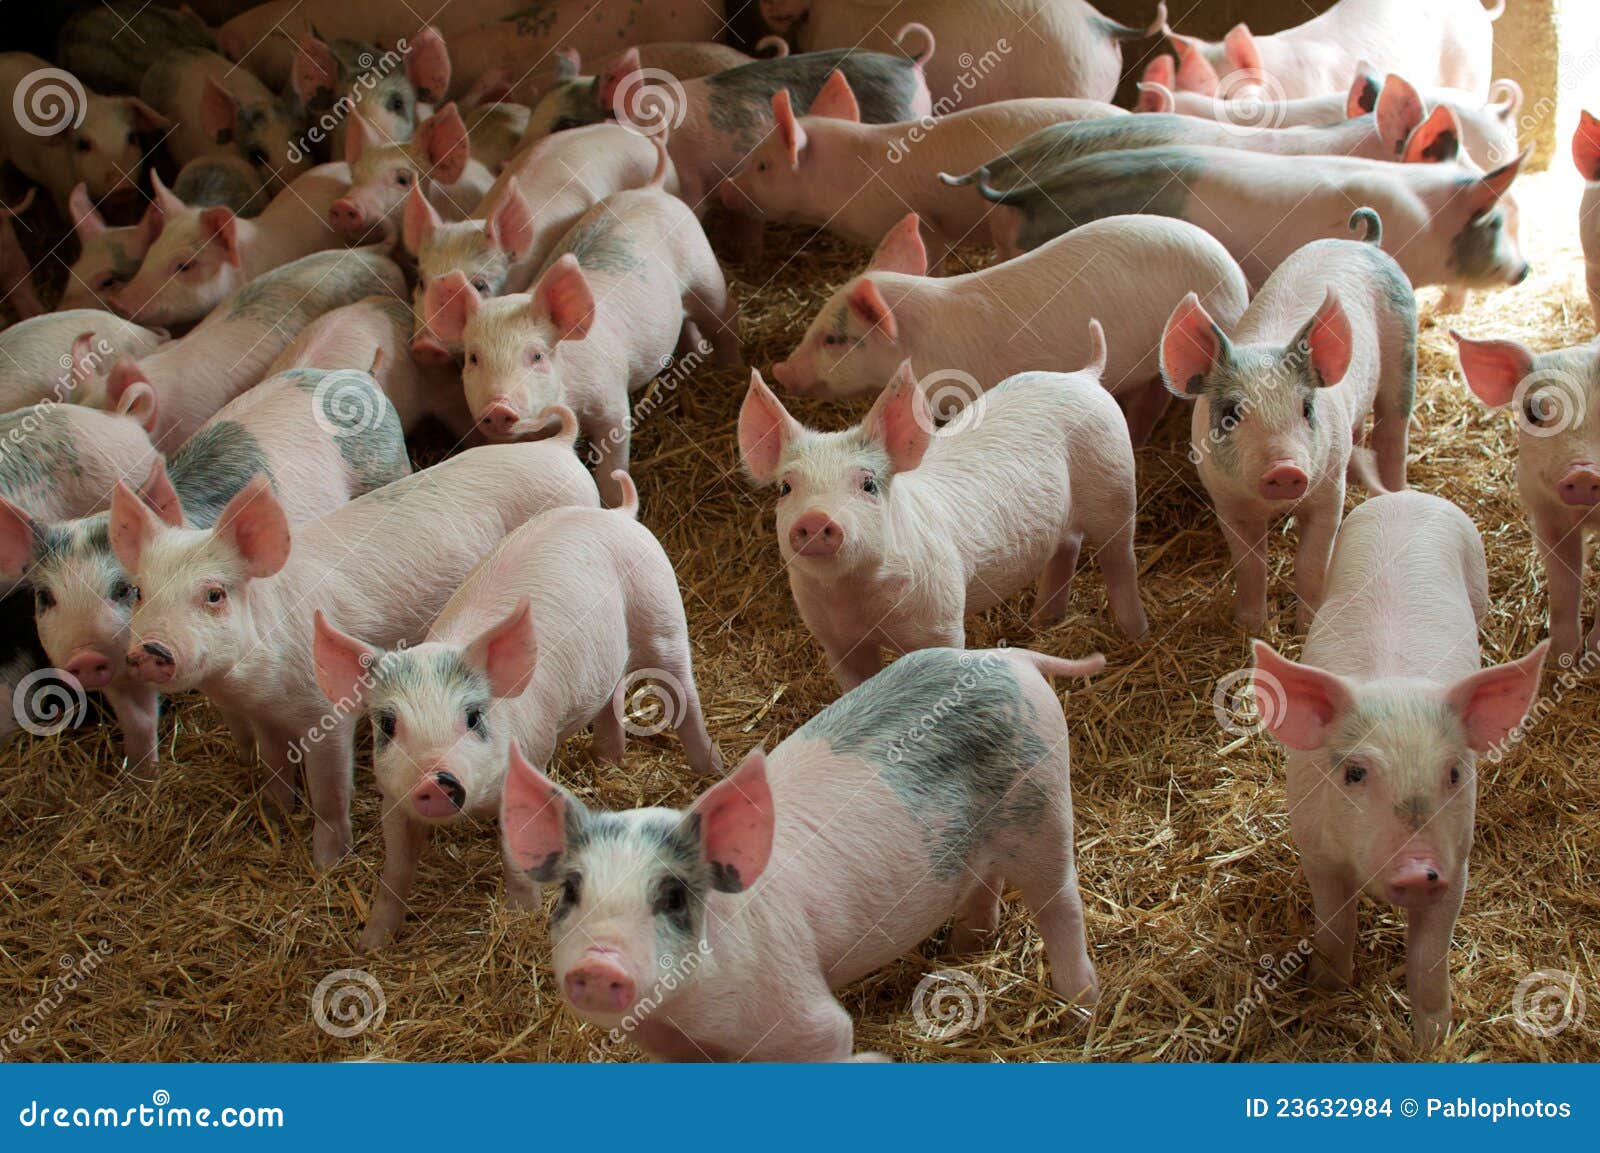 pigs in a farm